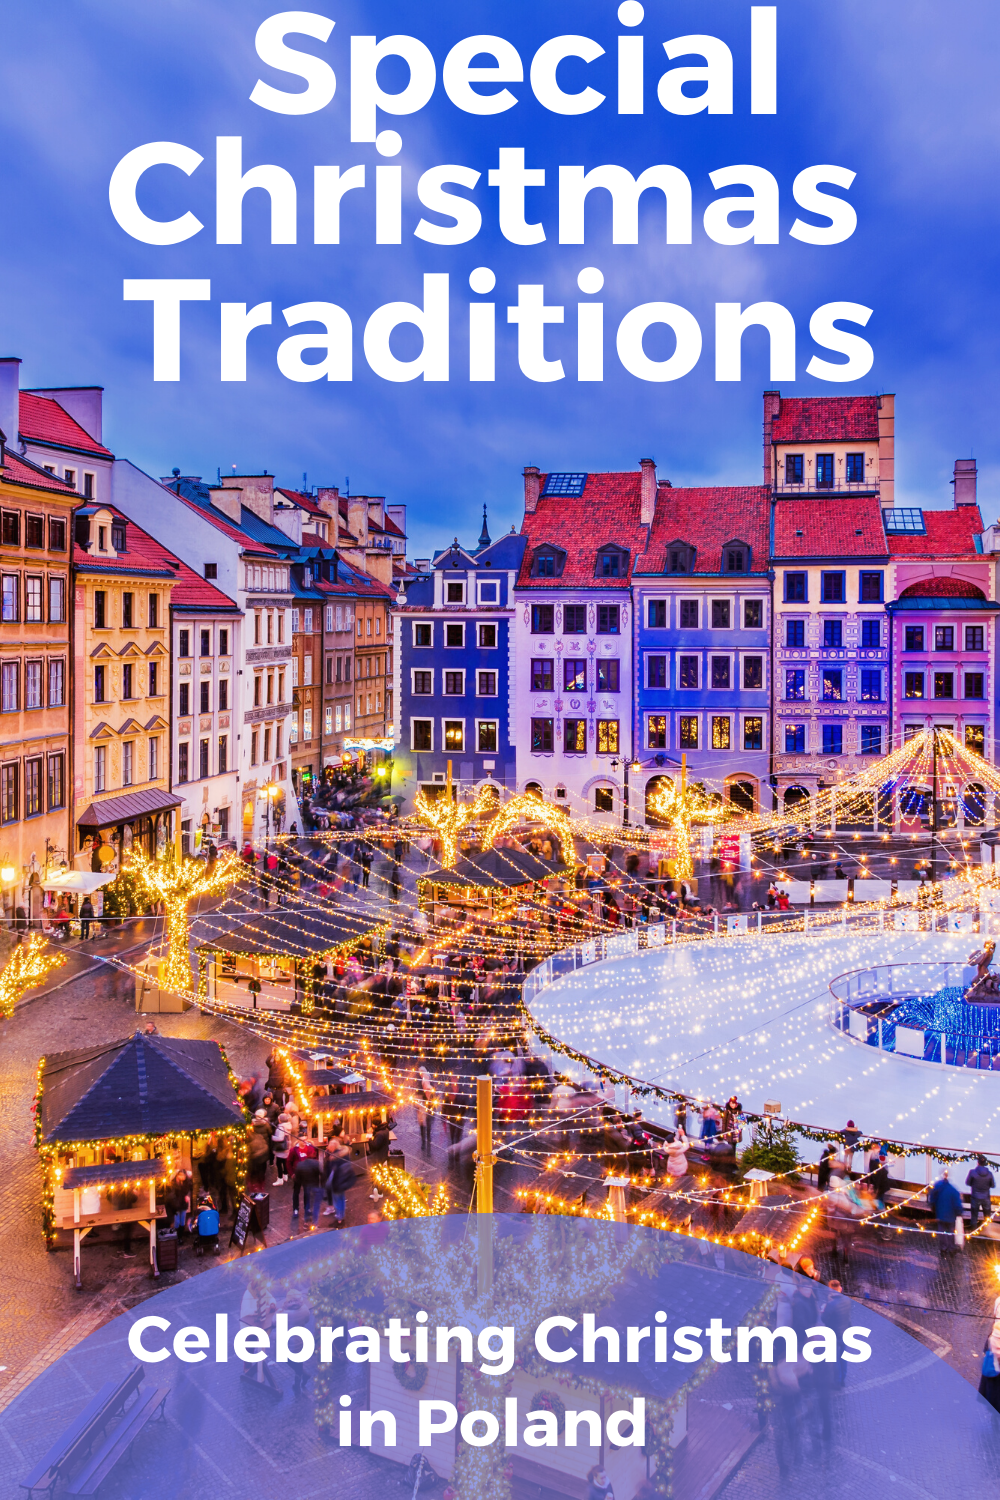 12 Wonderful Polish Traditions for Christmas